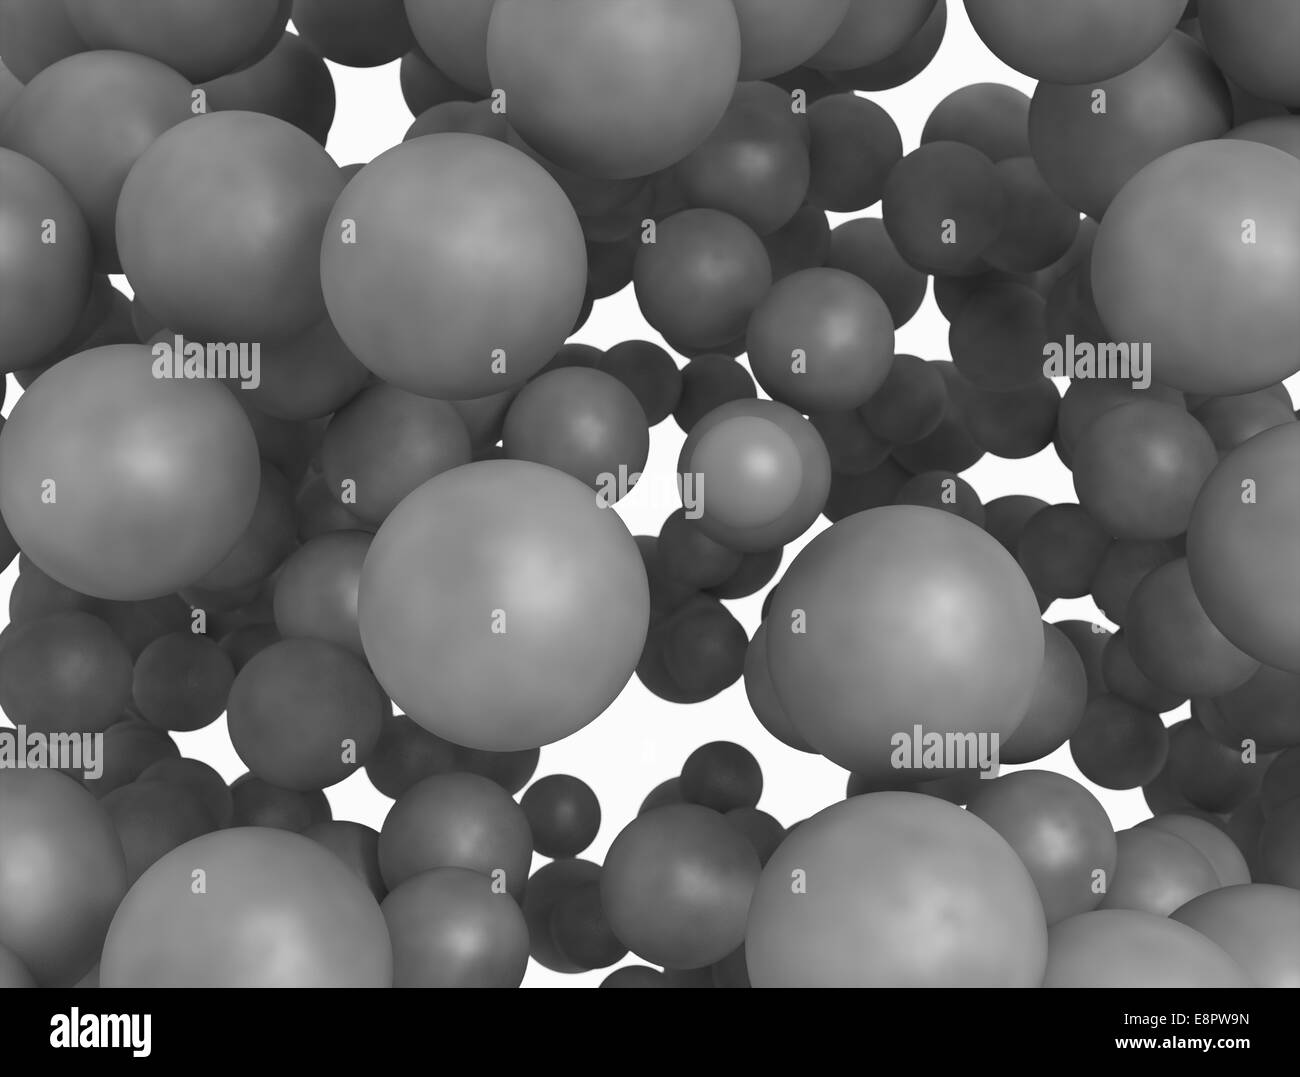 Grupo de esferas metálicas oscuras Foto de stock